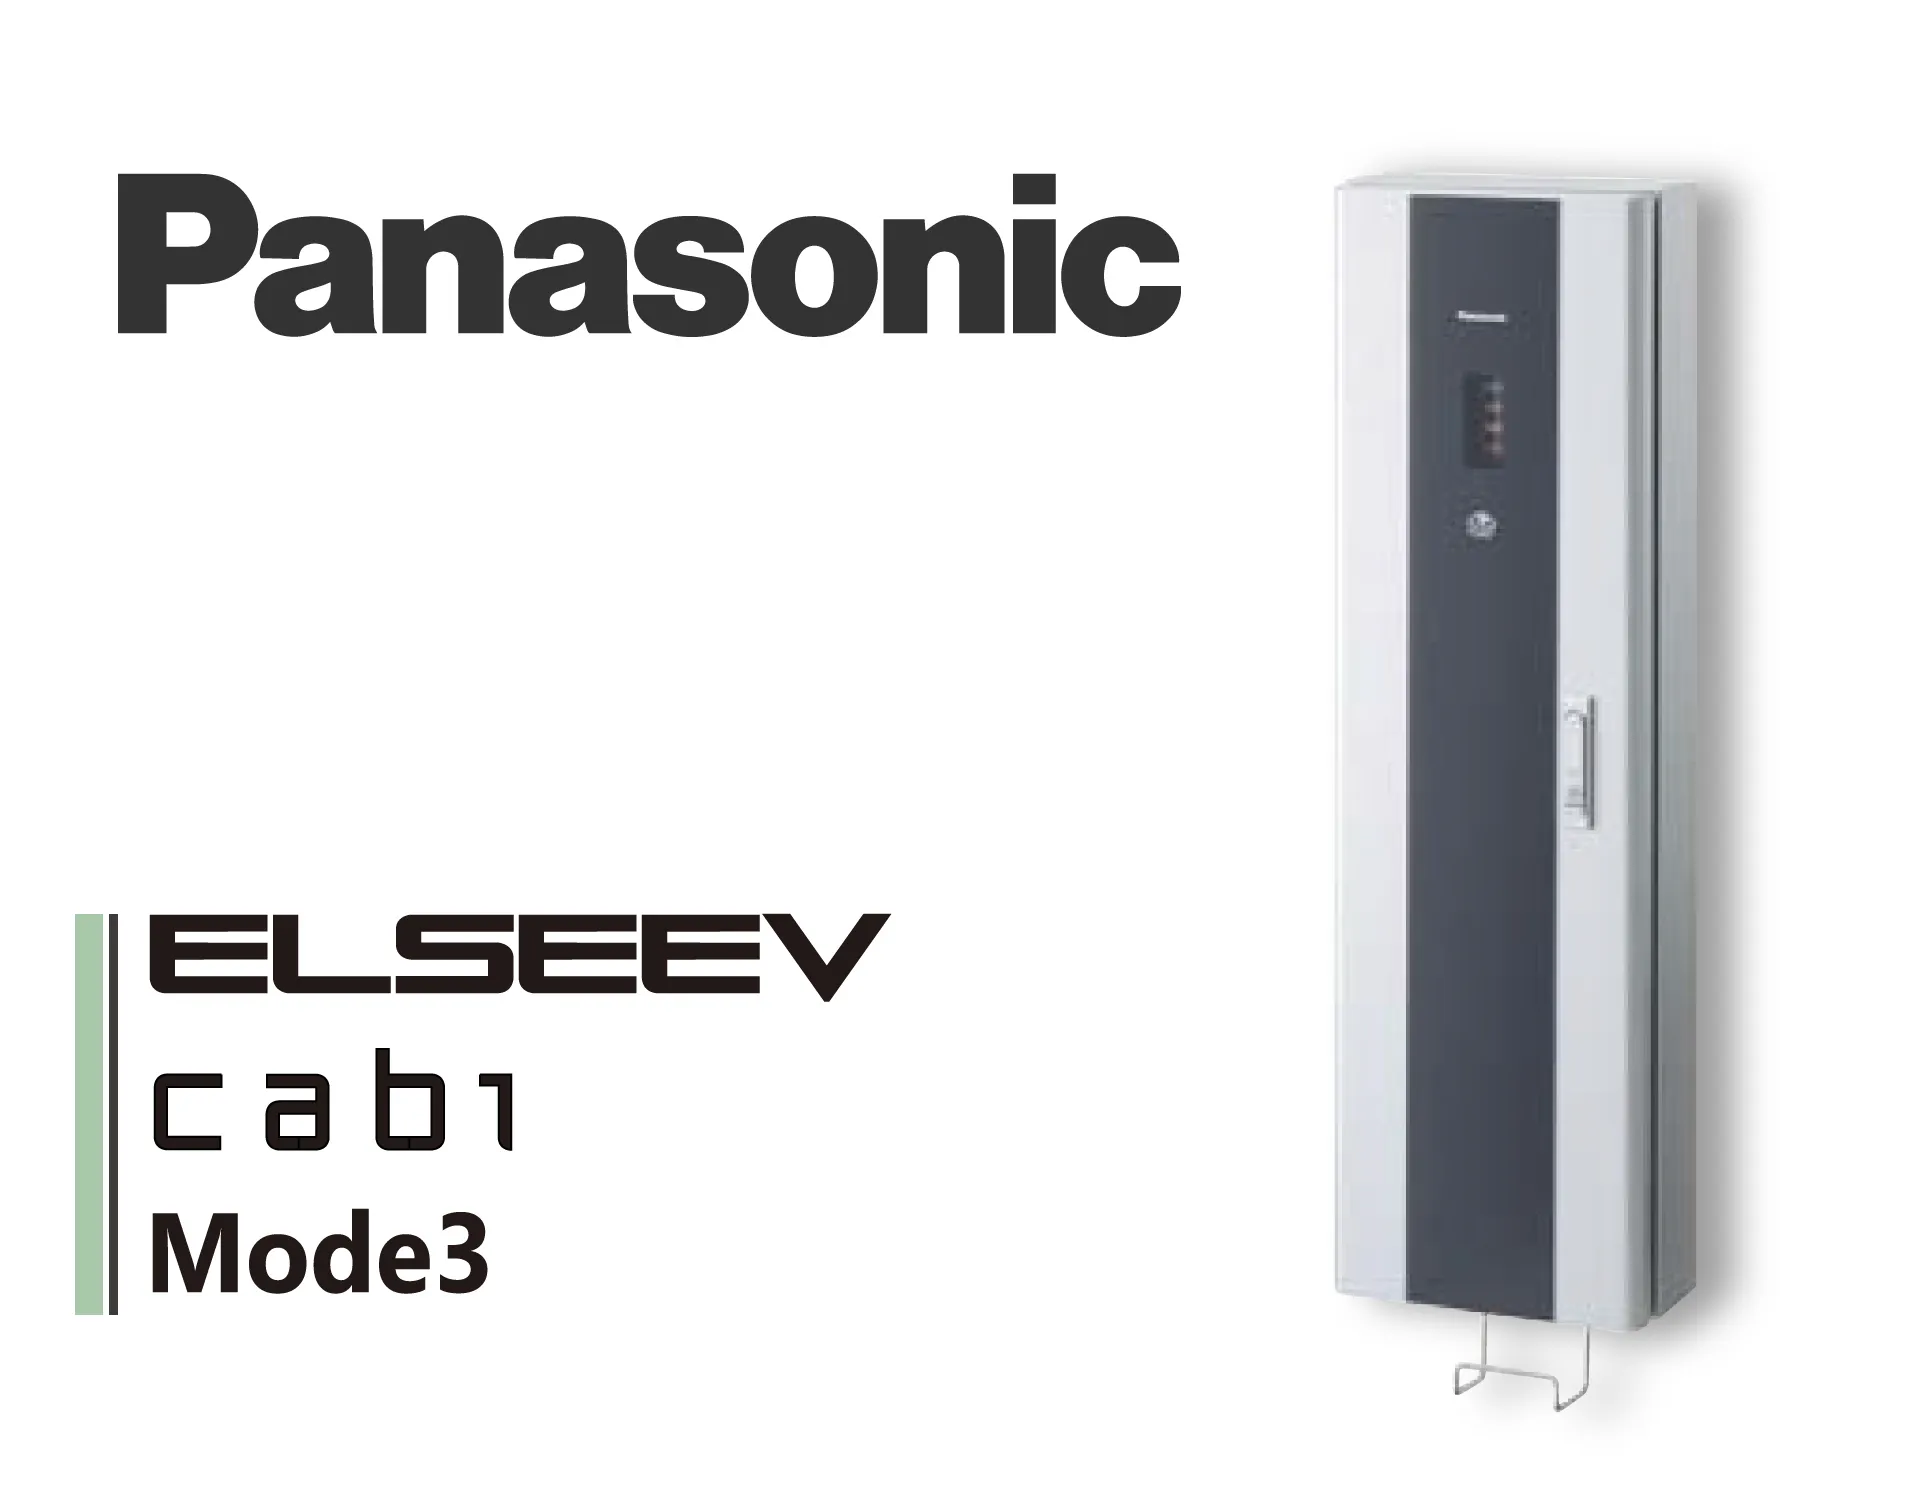 Panasonic ELSEEV cabi Mode3 の製品詳細